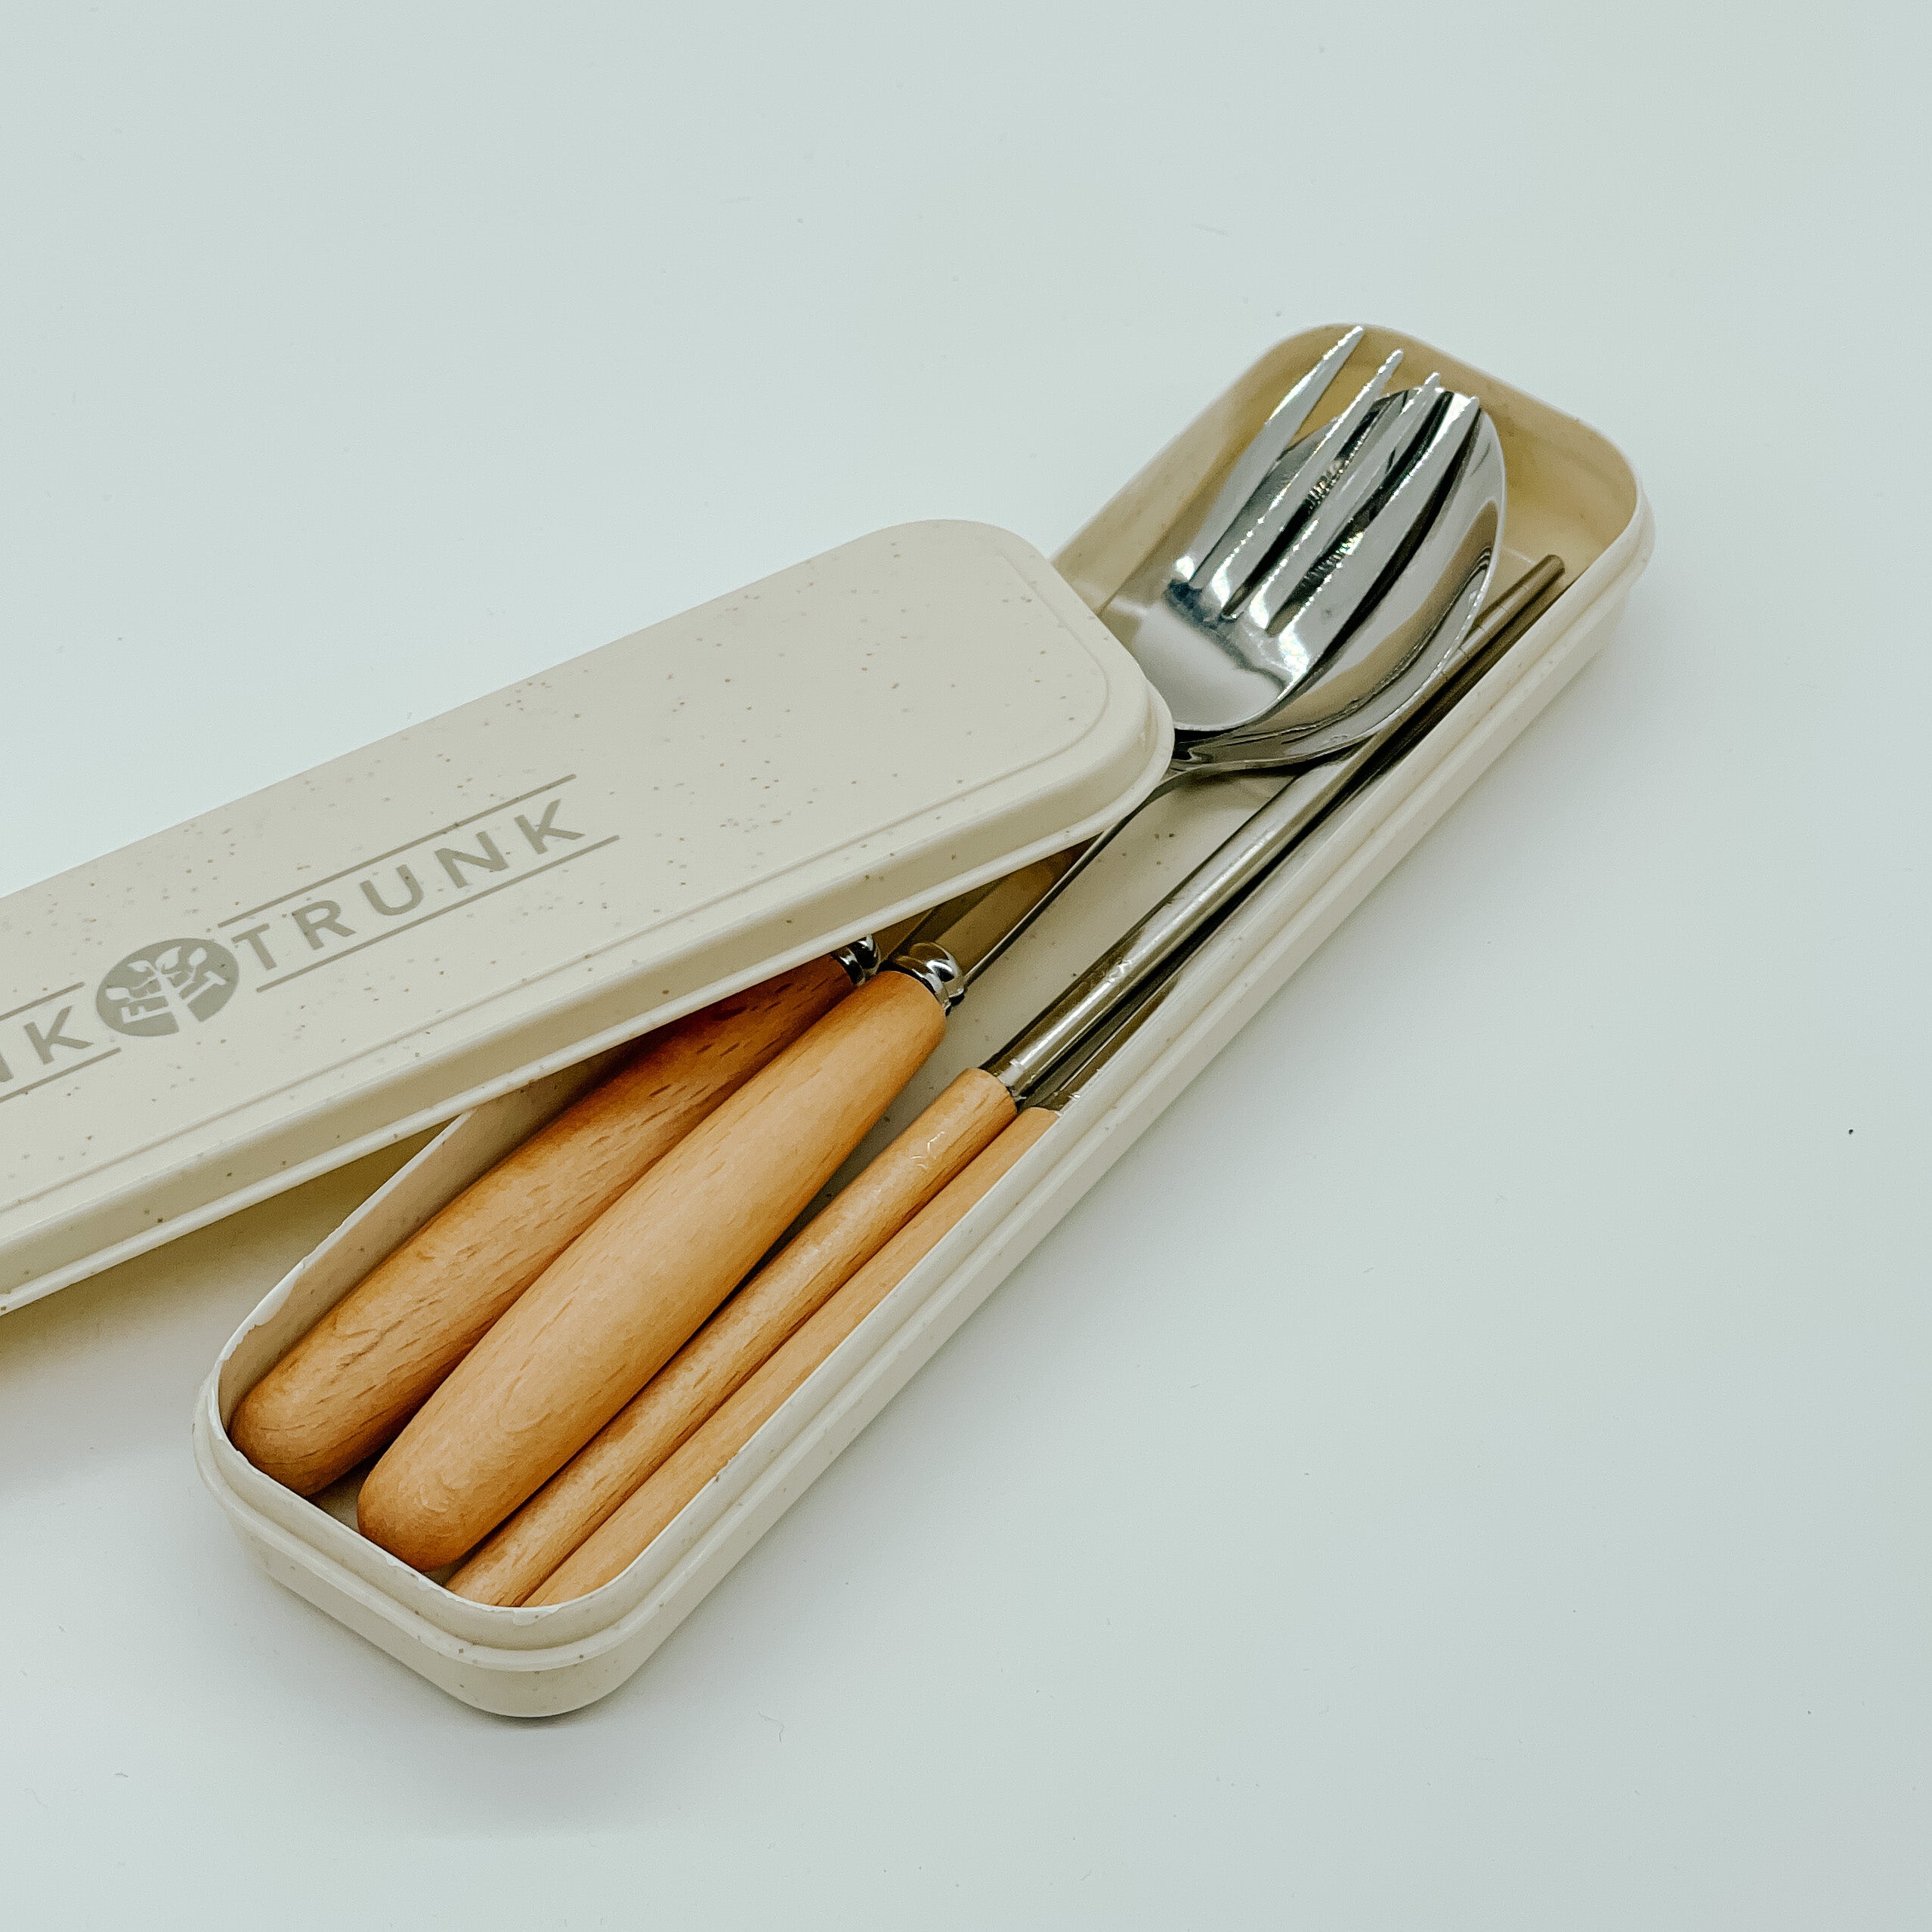 Funkutlery - Bamboo x Metal Cutlery Set